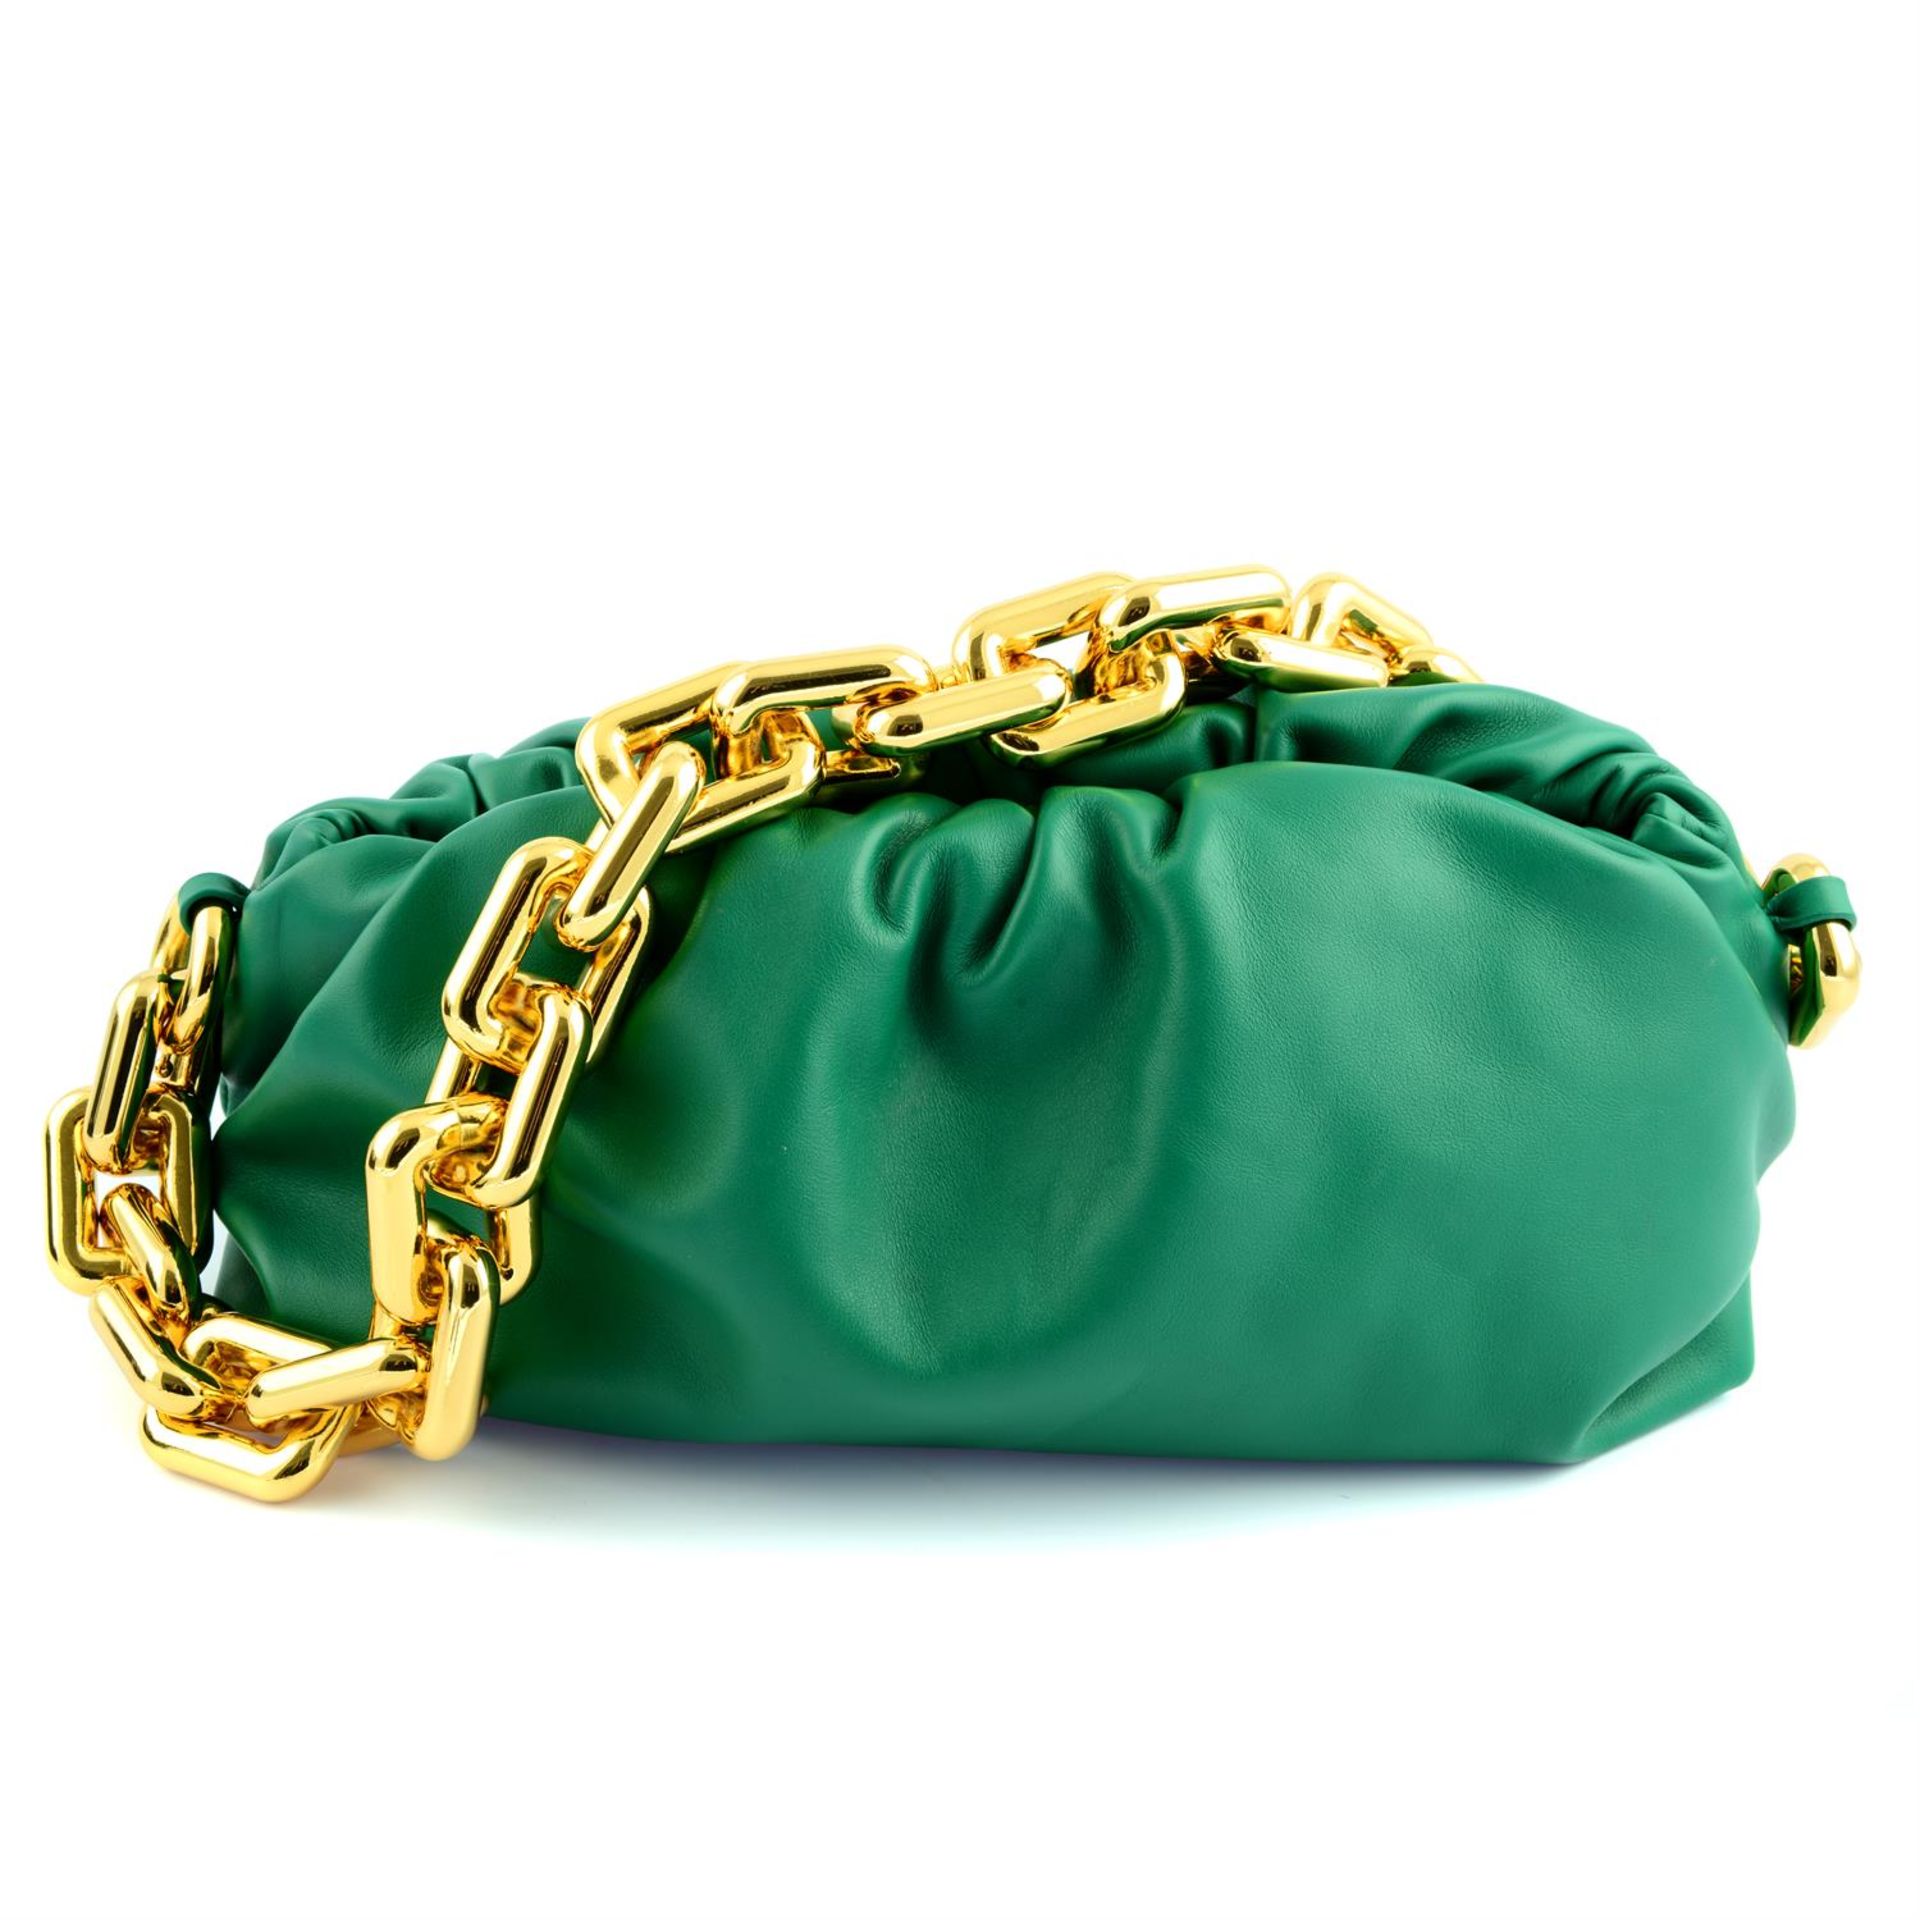 BOTTEGA VENETA - a green leather chain pouch. - Image 2 of 4